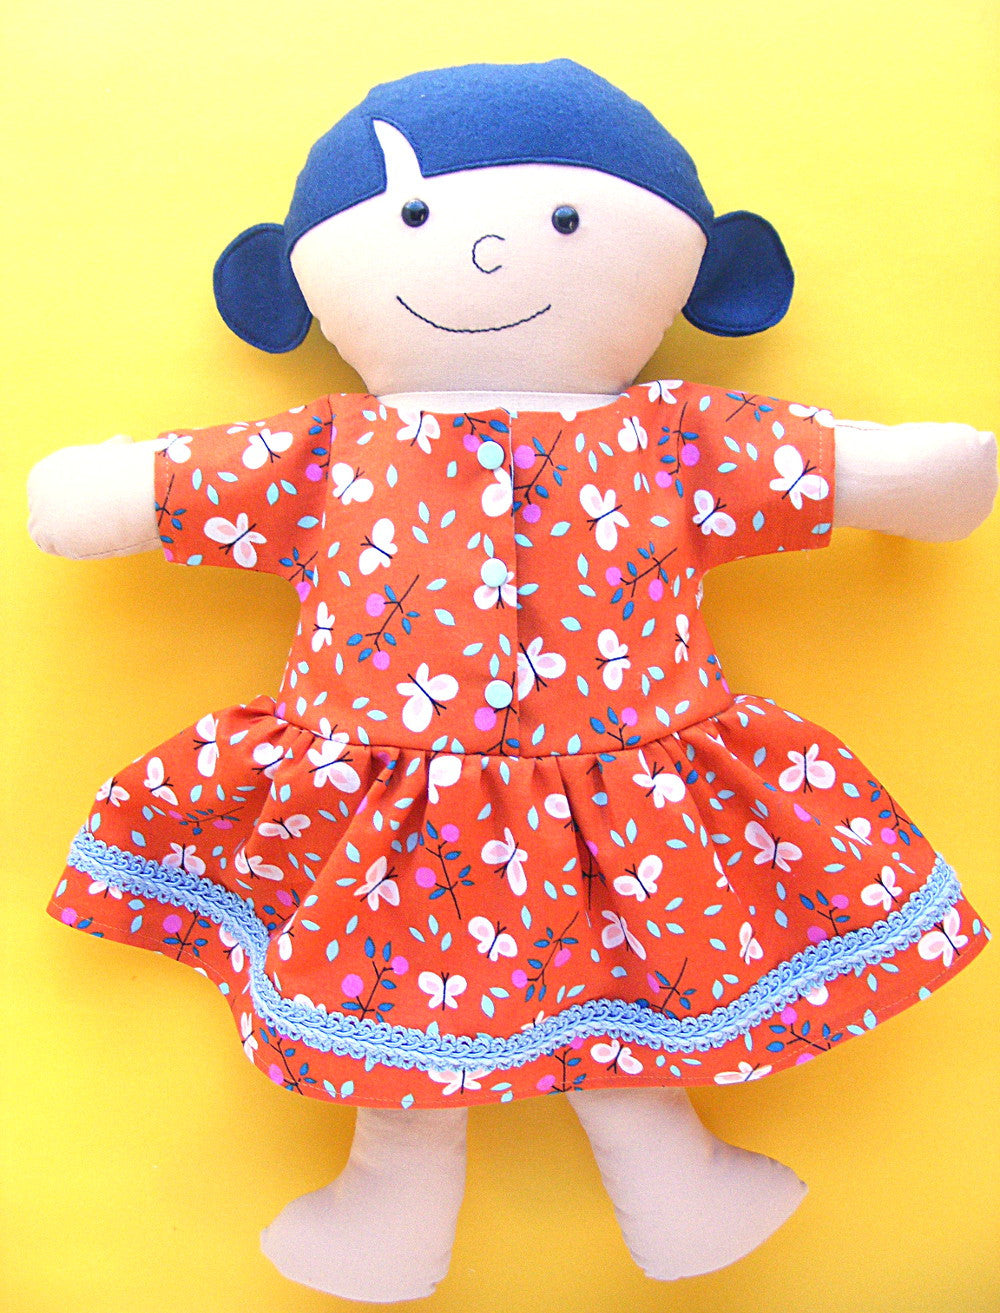 Dress Up Bunch Doll Raincoat Pattern